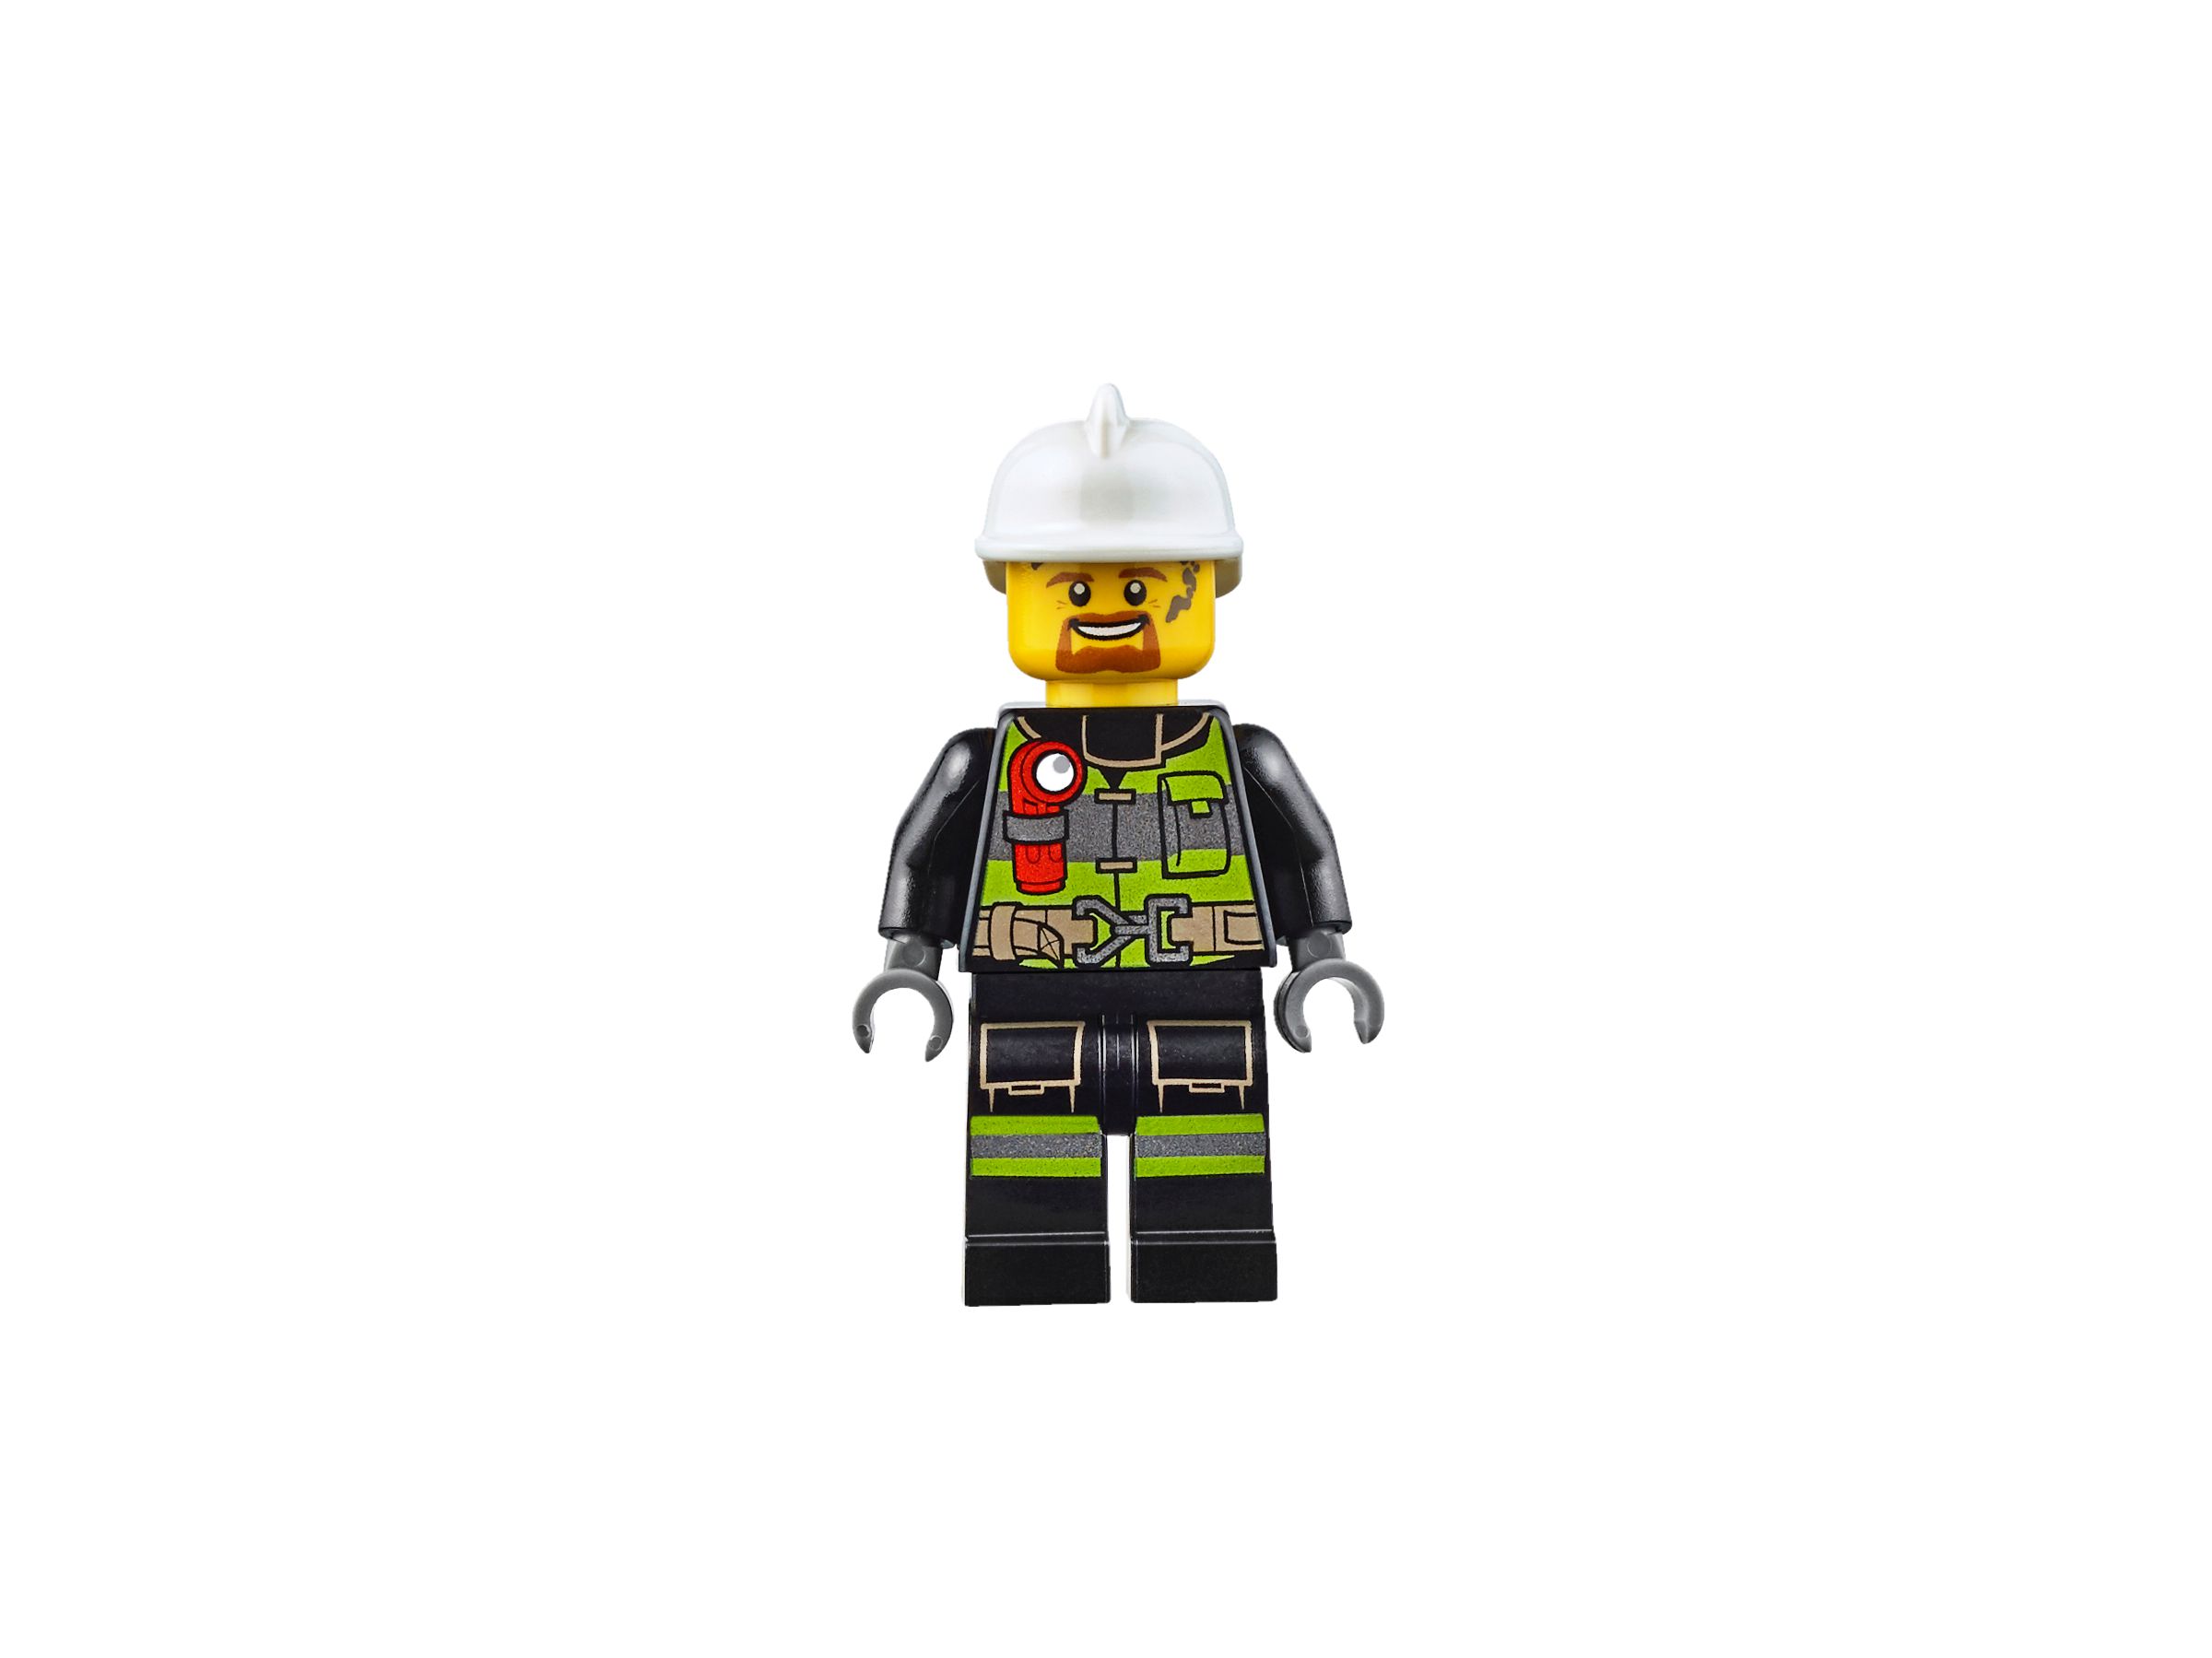 LEGO City 60110 Große Feuerwehrstation LEGO_60110_alt18.jpg